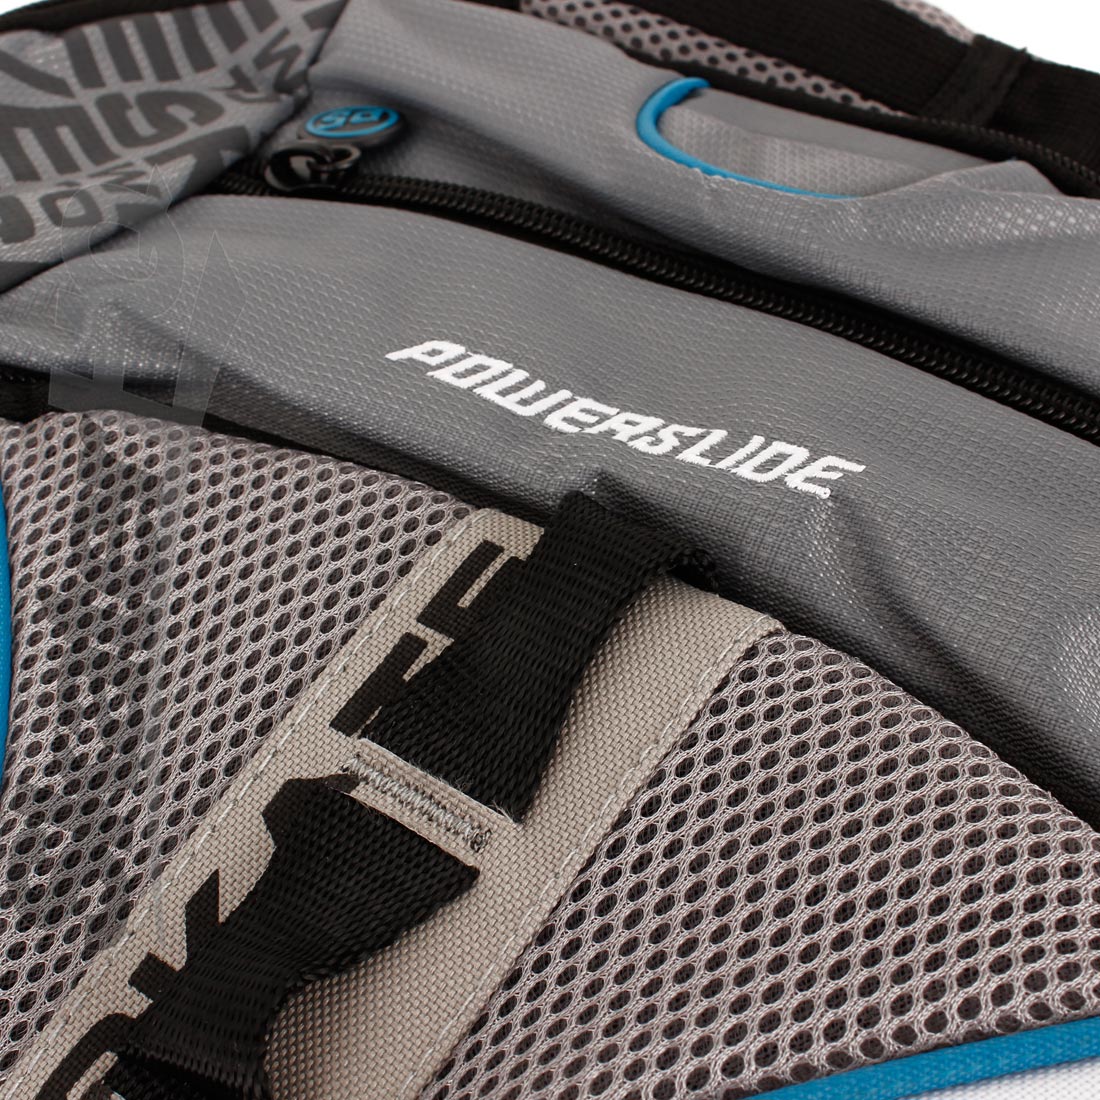 Powerslide Phuzion Skate Bag - Grey/Blue Bags and Backpacks